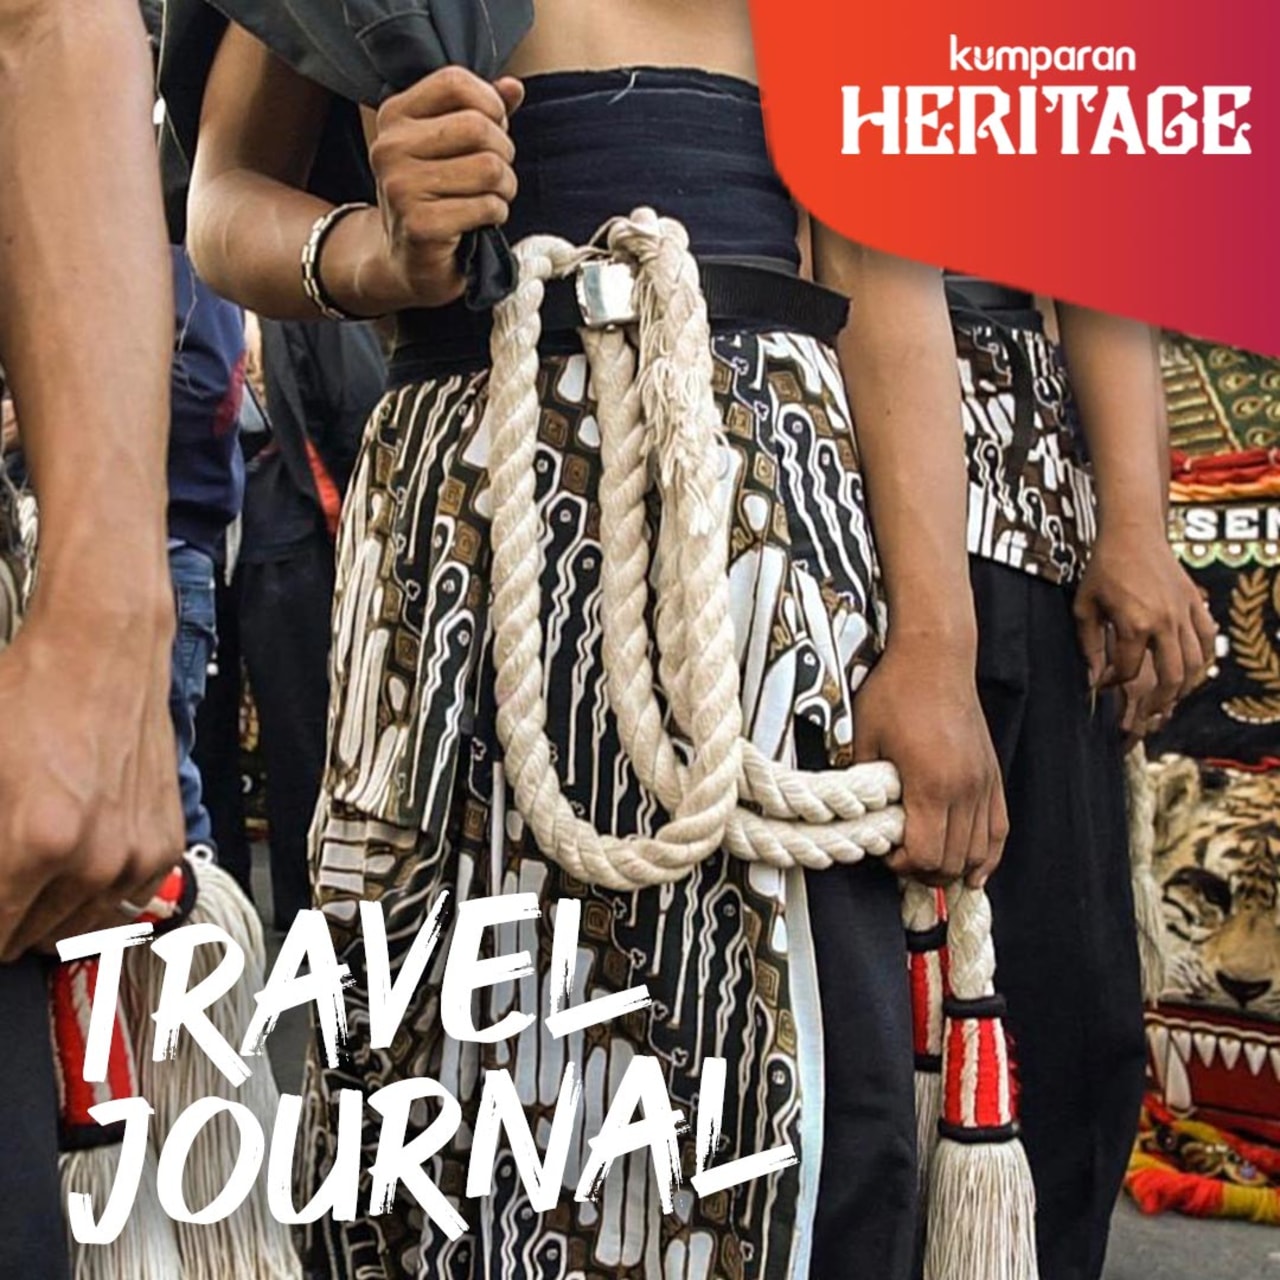 Travel journal